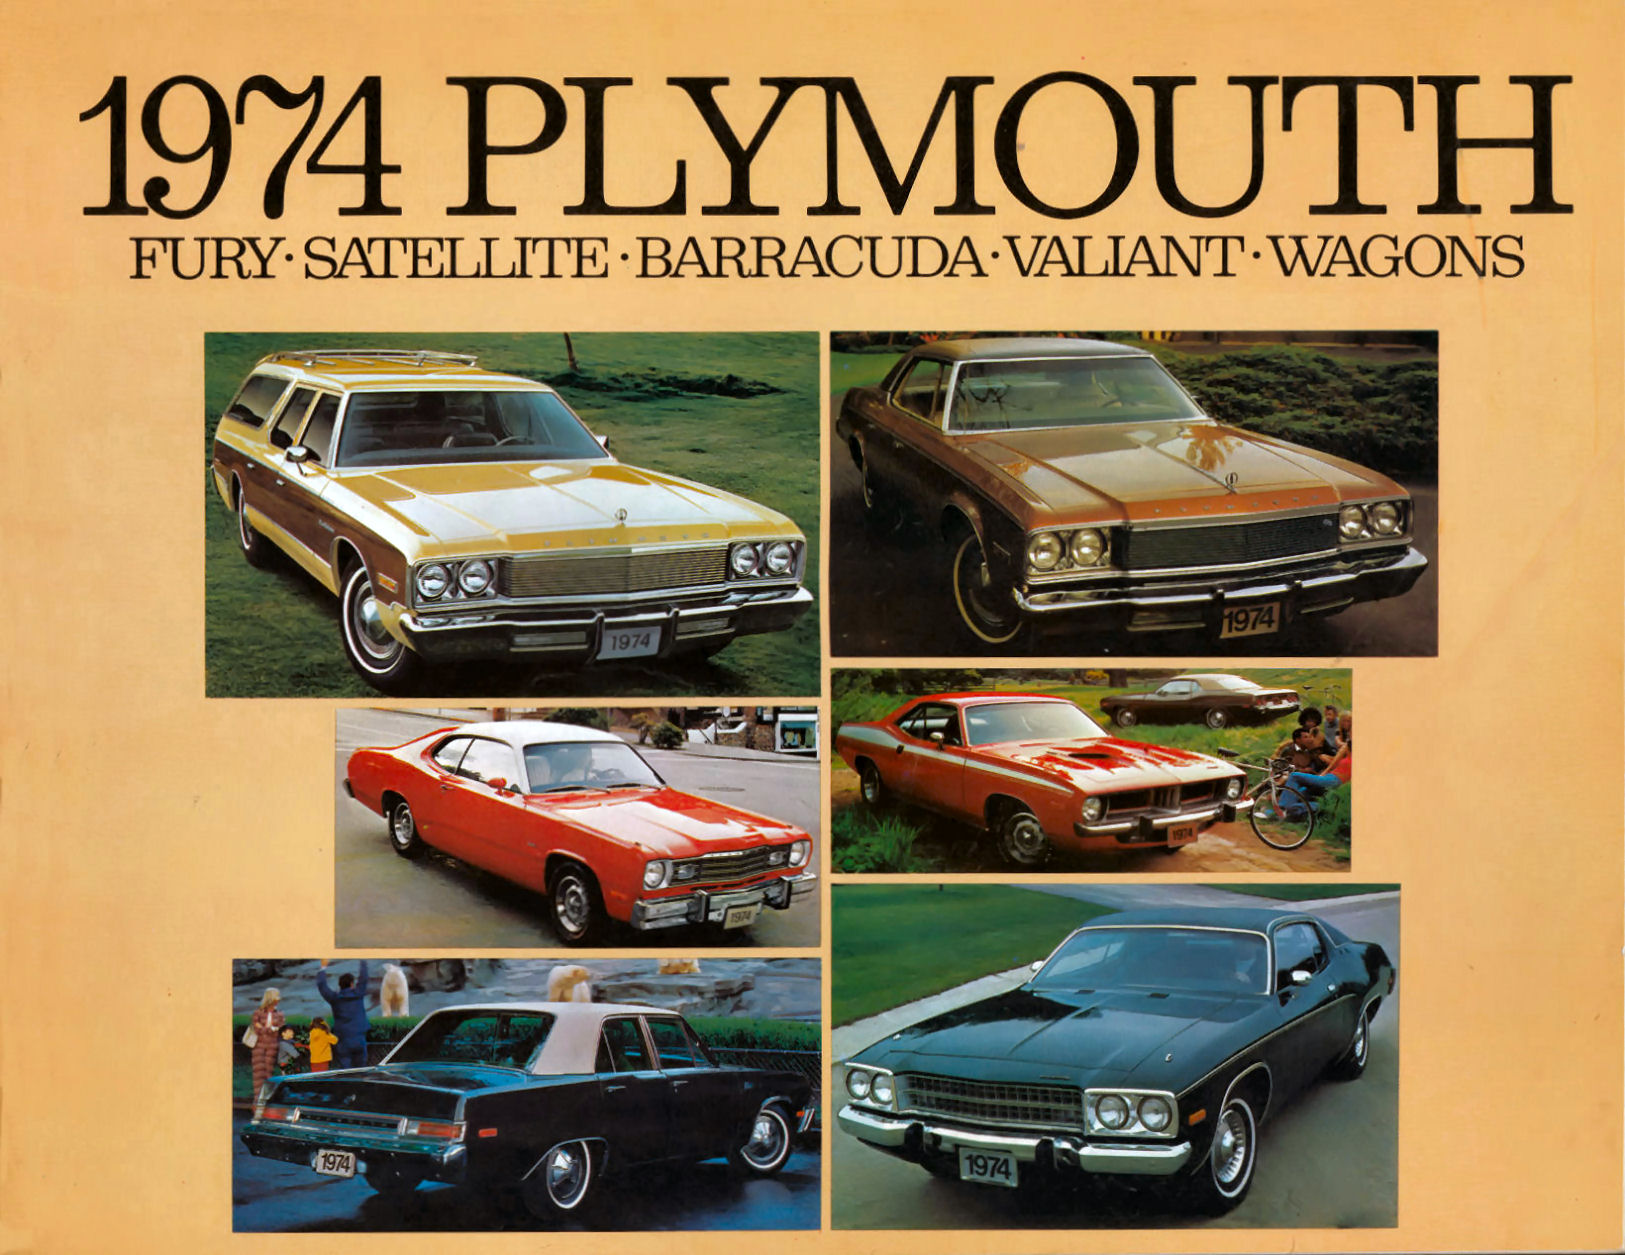 1974_Plymouth_Full_Line_Cdn-01